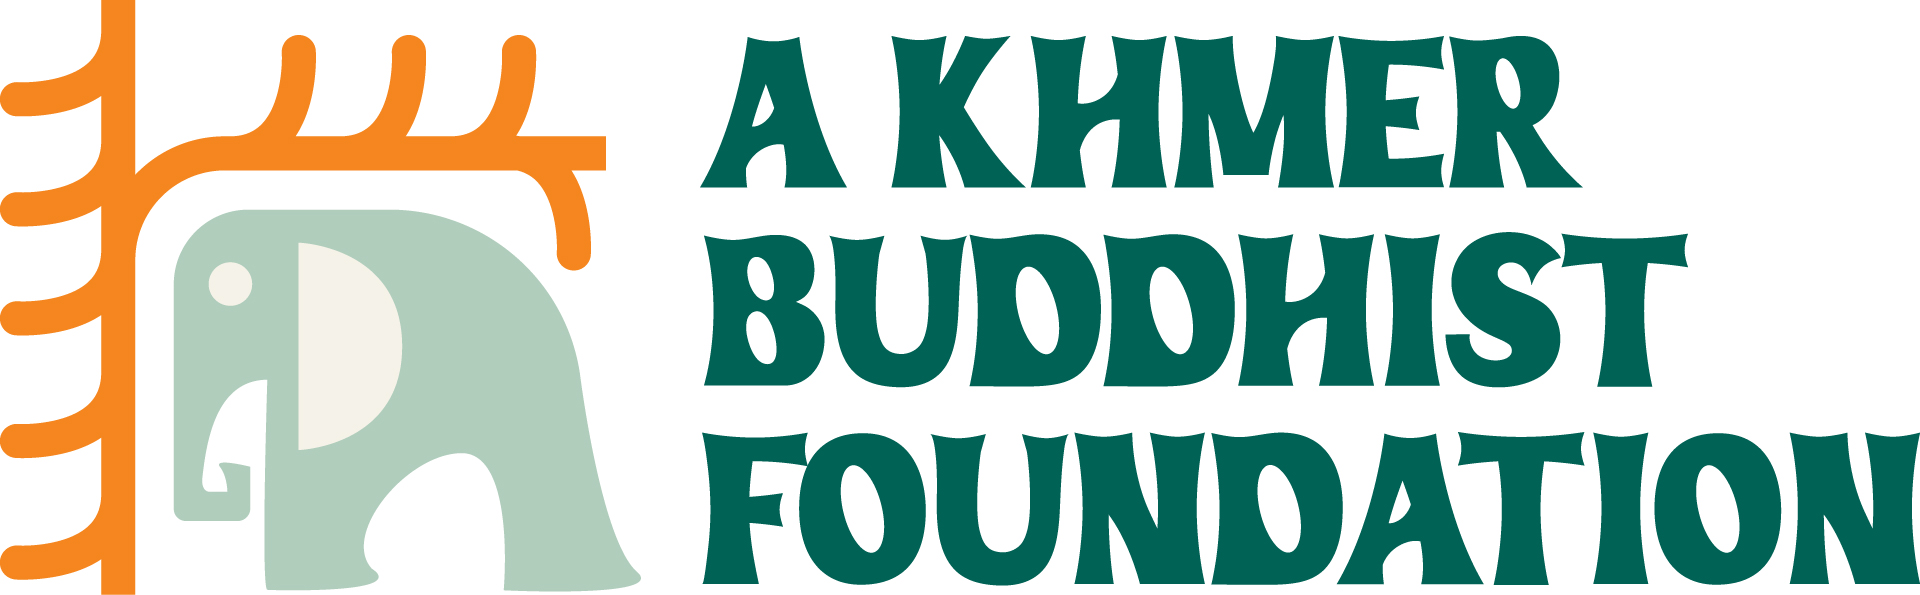 AKBF Logo - Primary_L.jpg